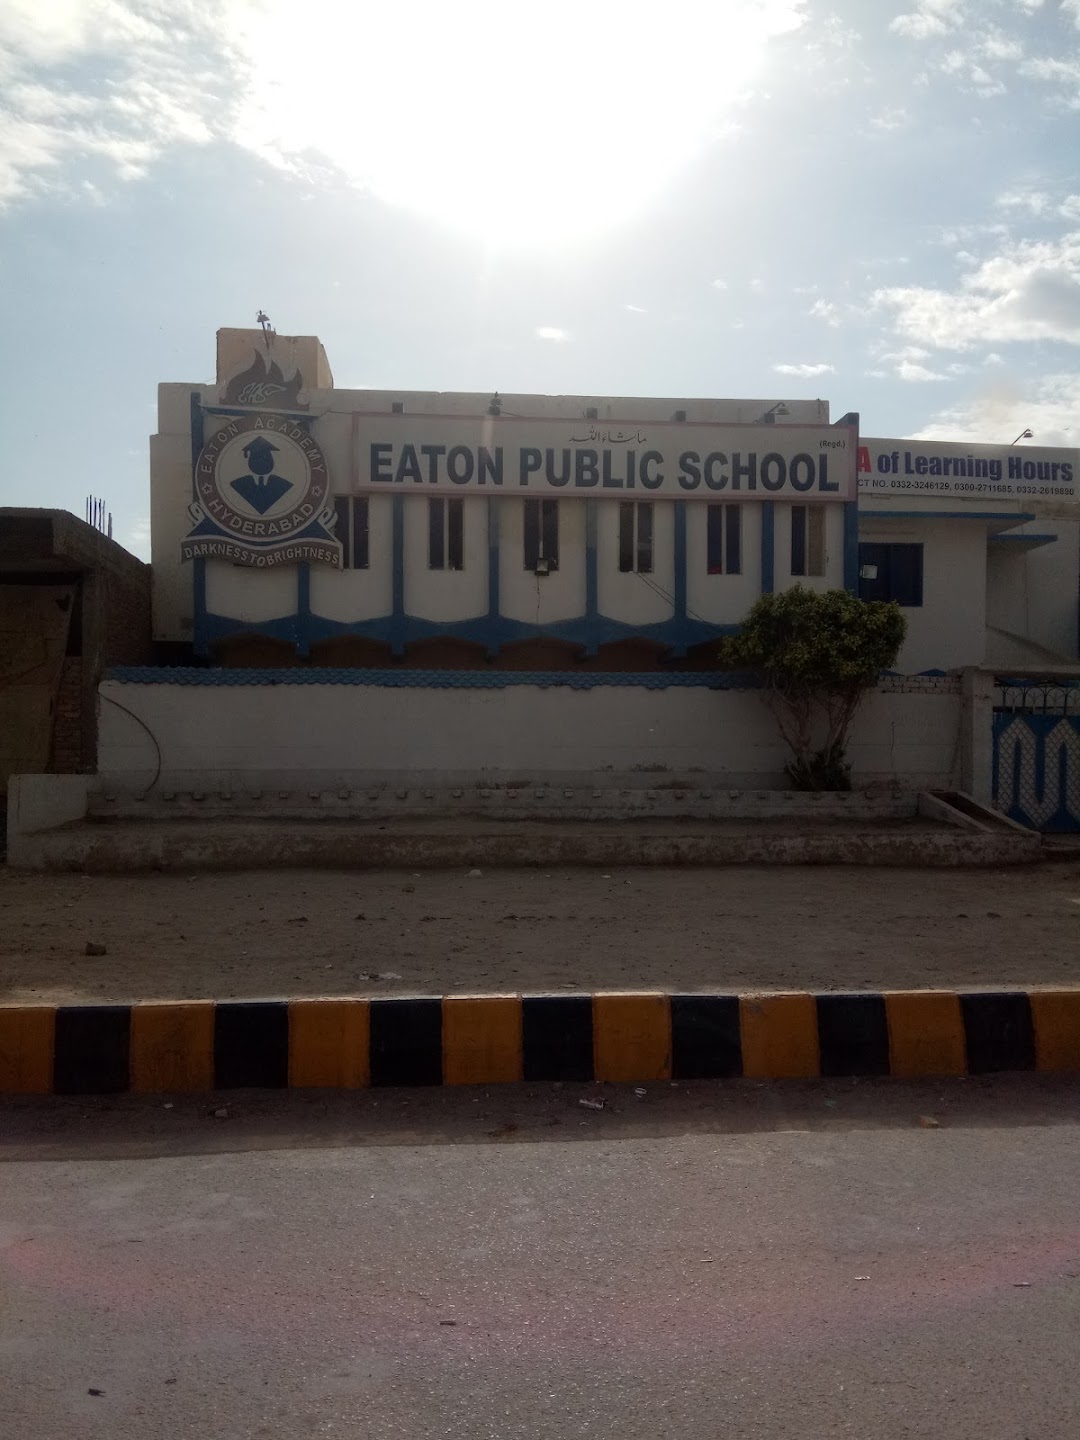 Eaton Academy (Eaton public school)